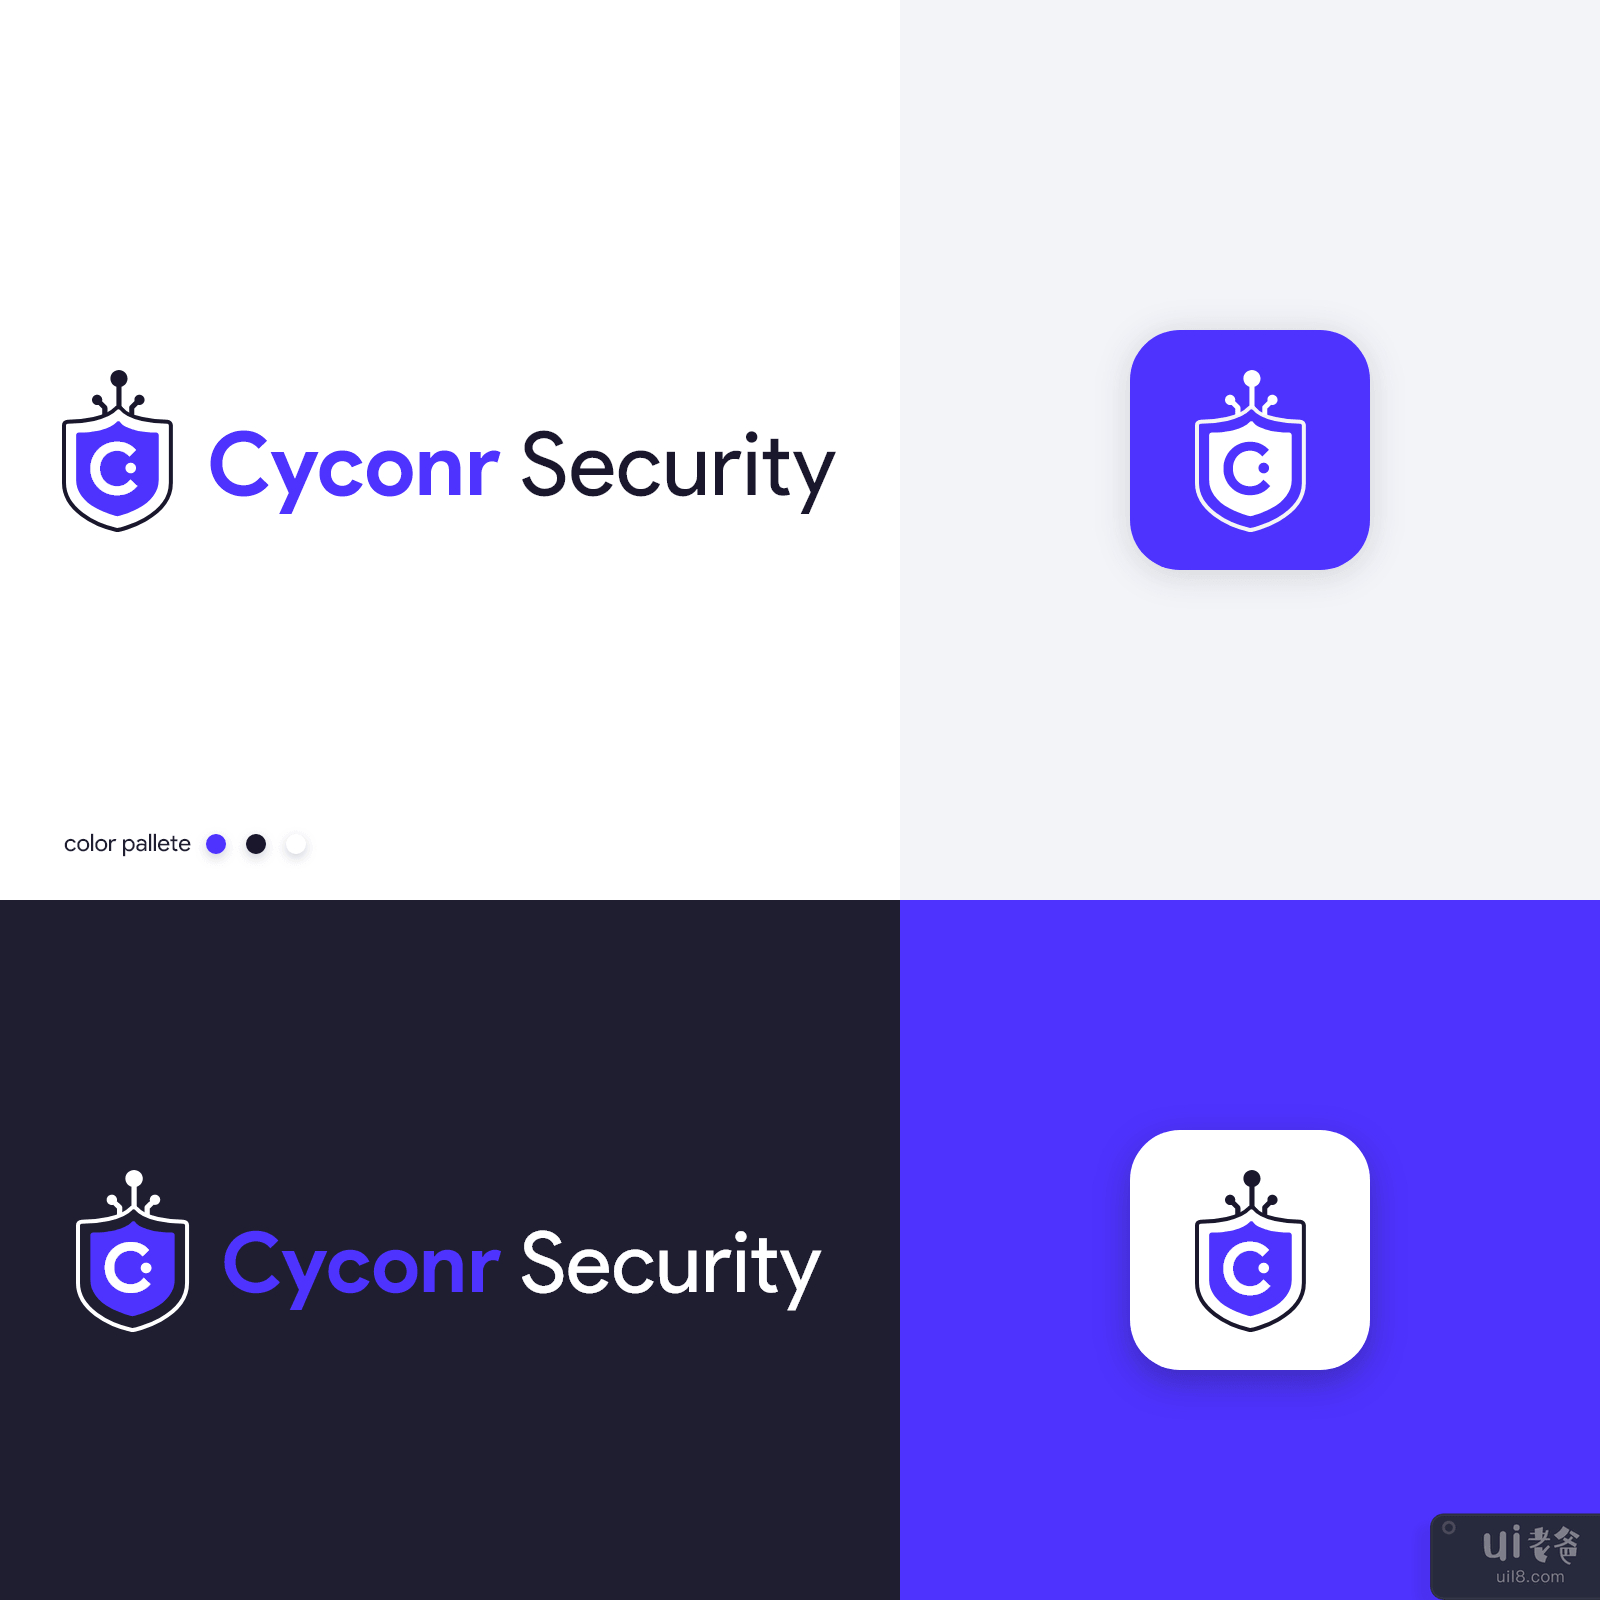 Cyconr Security - 标志设计(Cyconr Security - Logo Design)插图